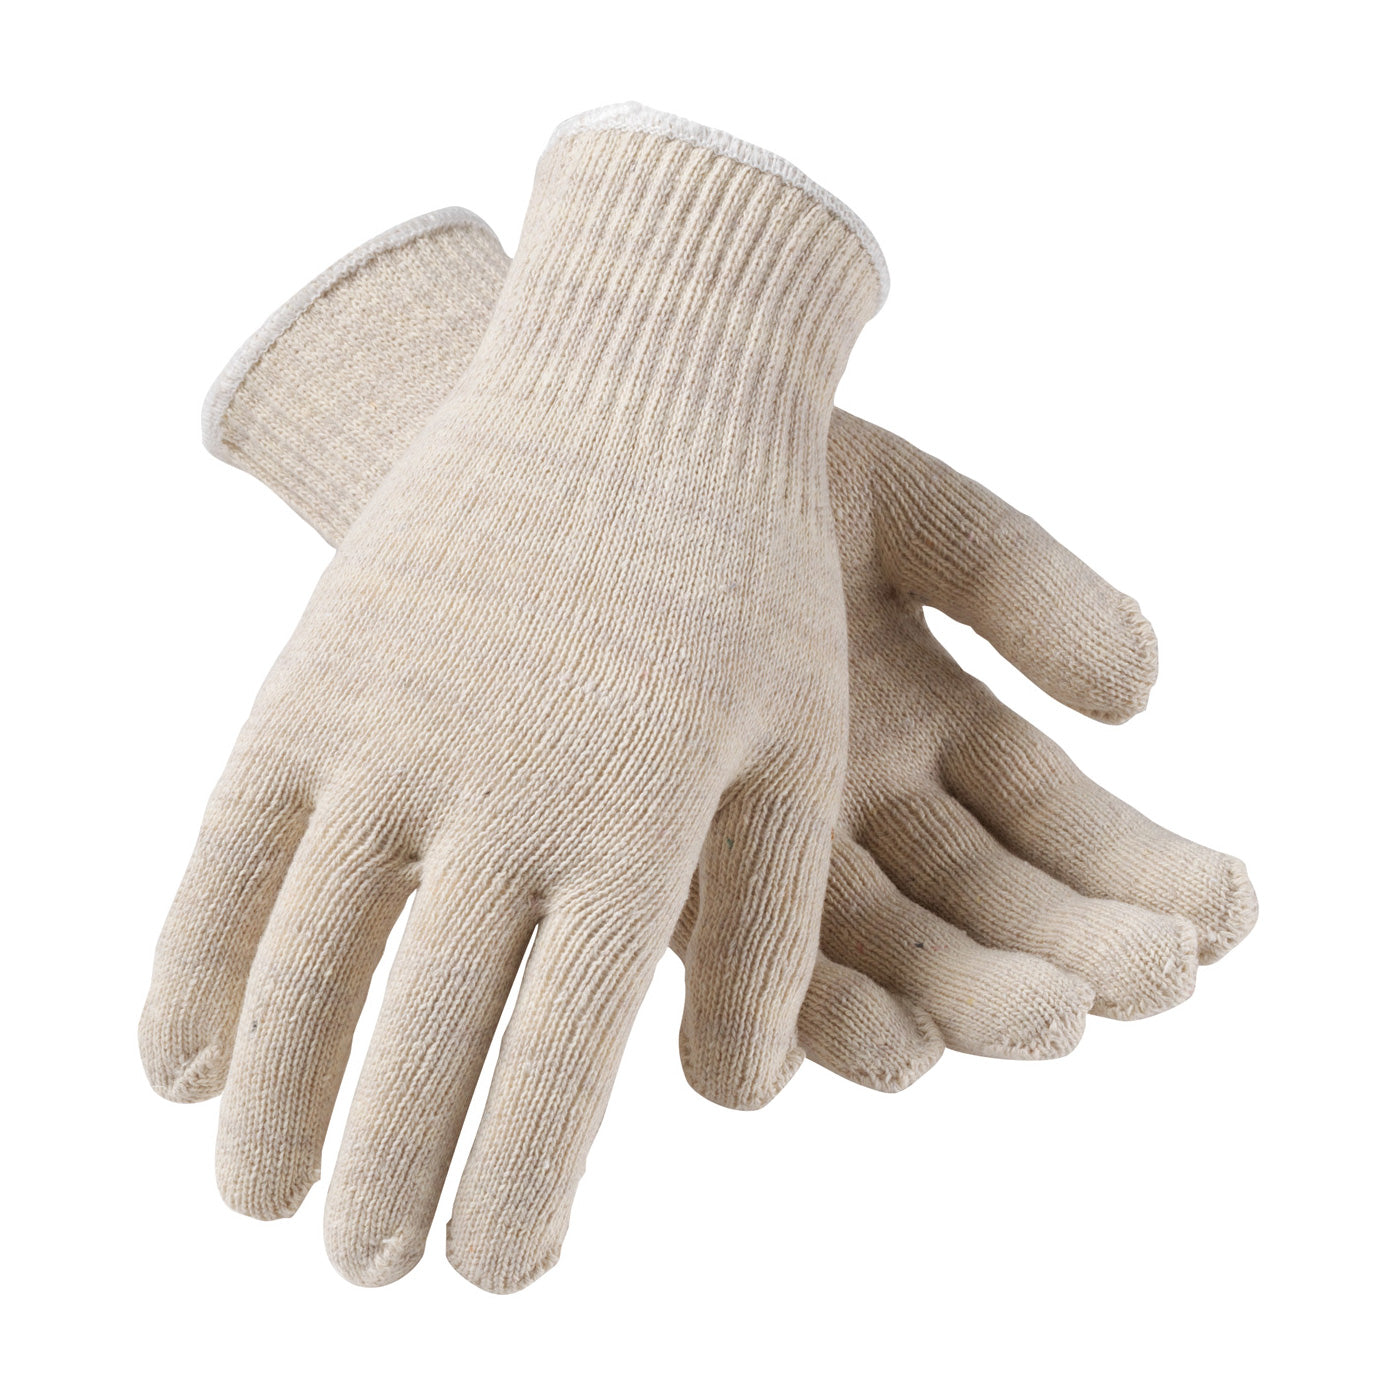 PIP 35-C2110/S Medium Weight Seamless Knit Cotton/Polyester Glove - 10 Gauge Natural